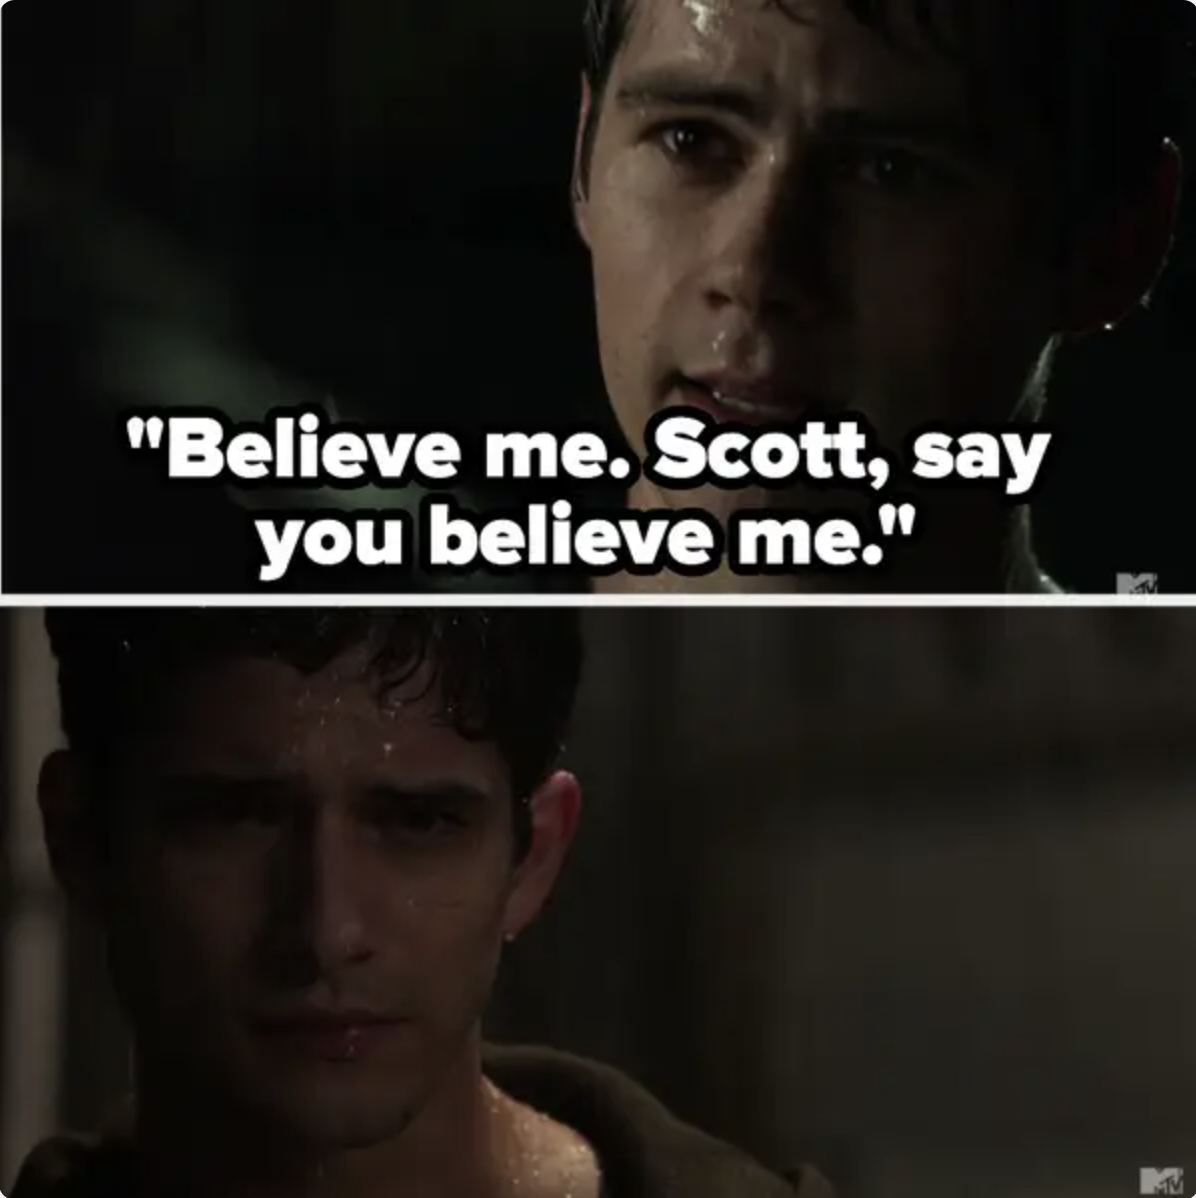 Stiles: &quot;believe me Scott, say you believe me,&quot; Scott just looks at him sadly